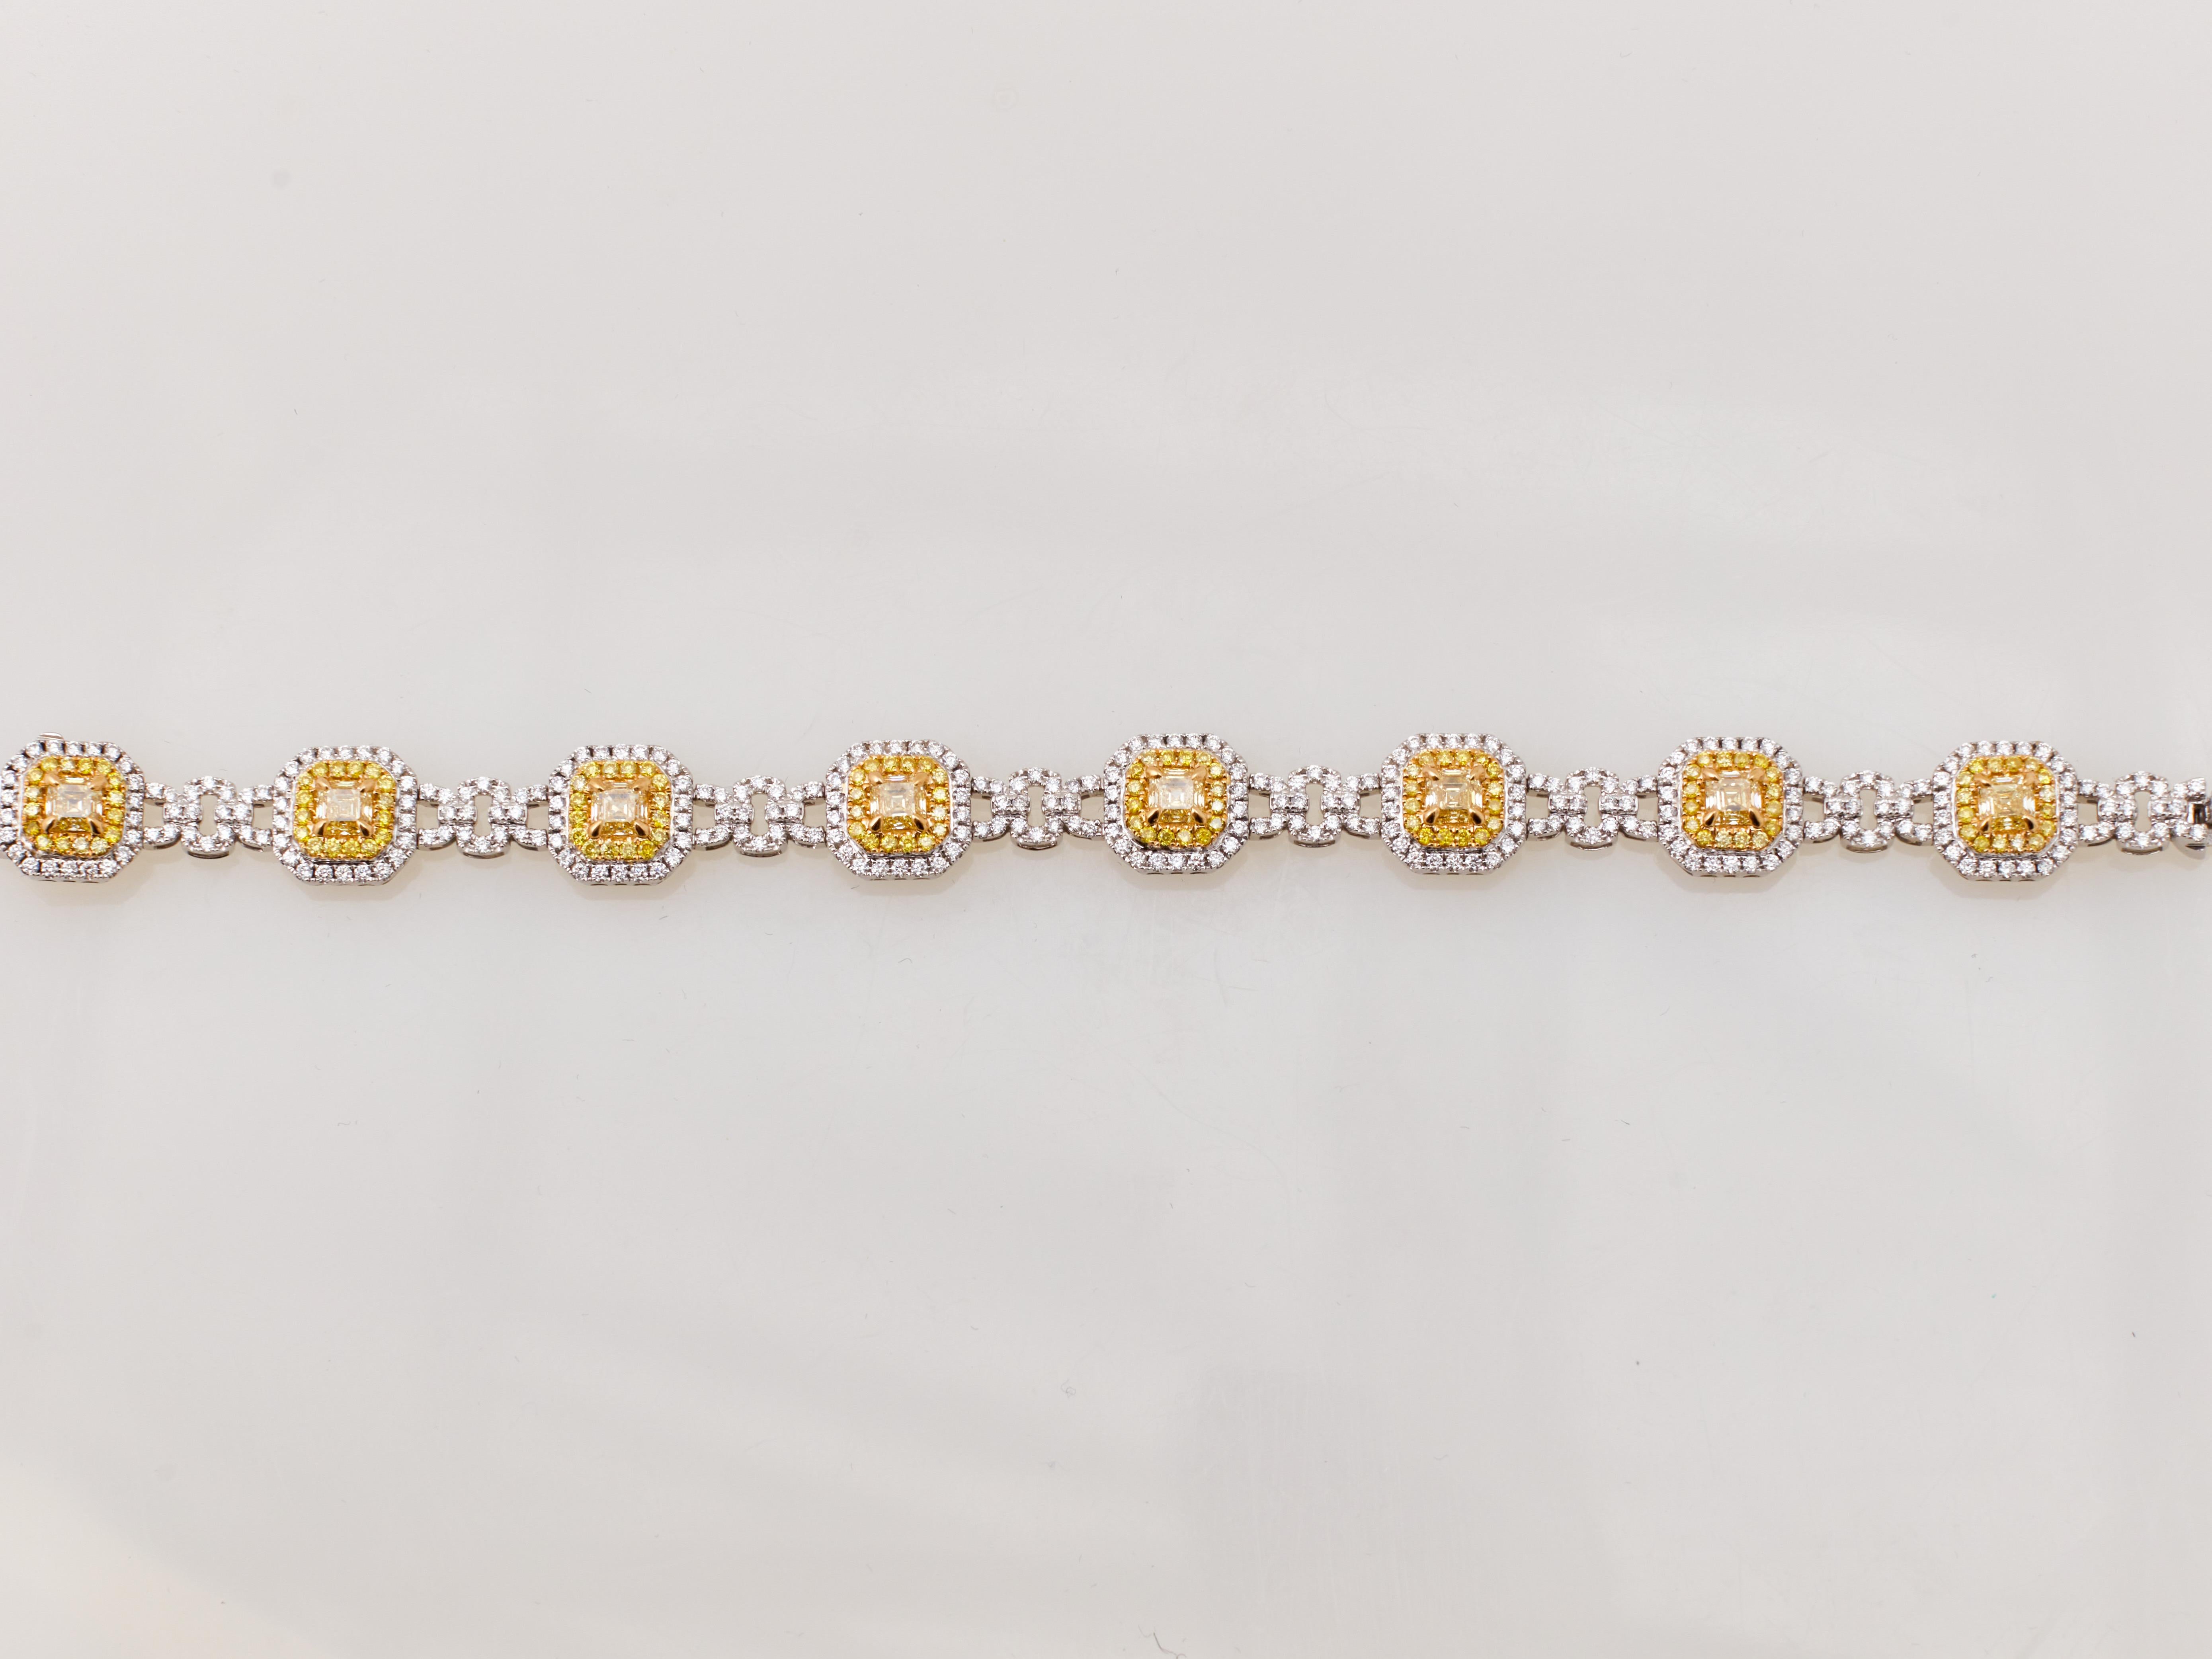 Contemporary 9.62 Carat Asscher Cut Fancy Yellow and White Diamond Bracelet, 18K White Gold For Sale